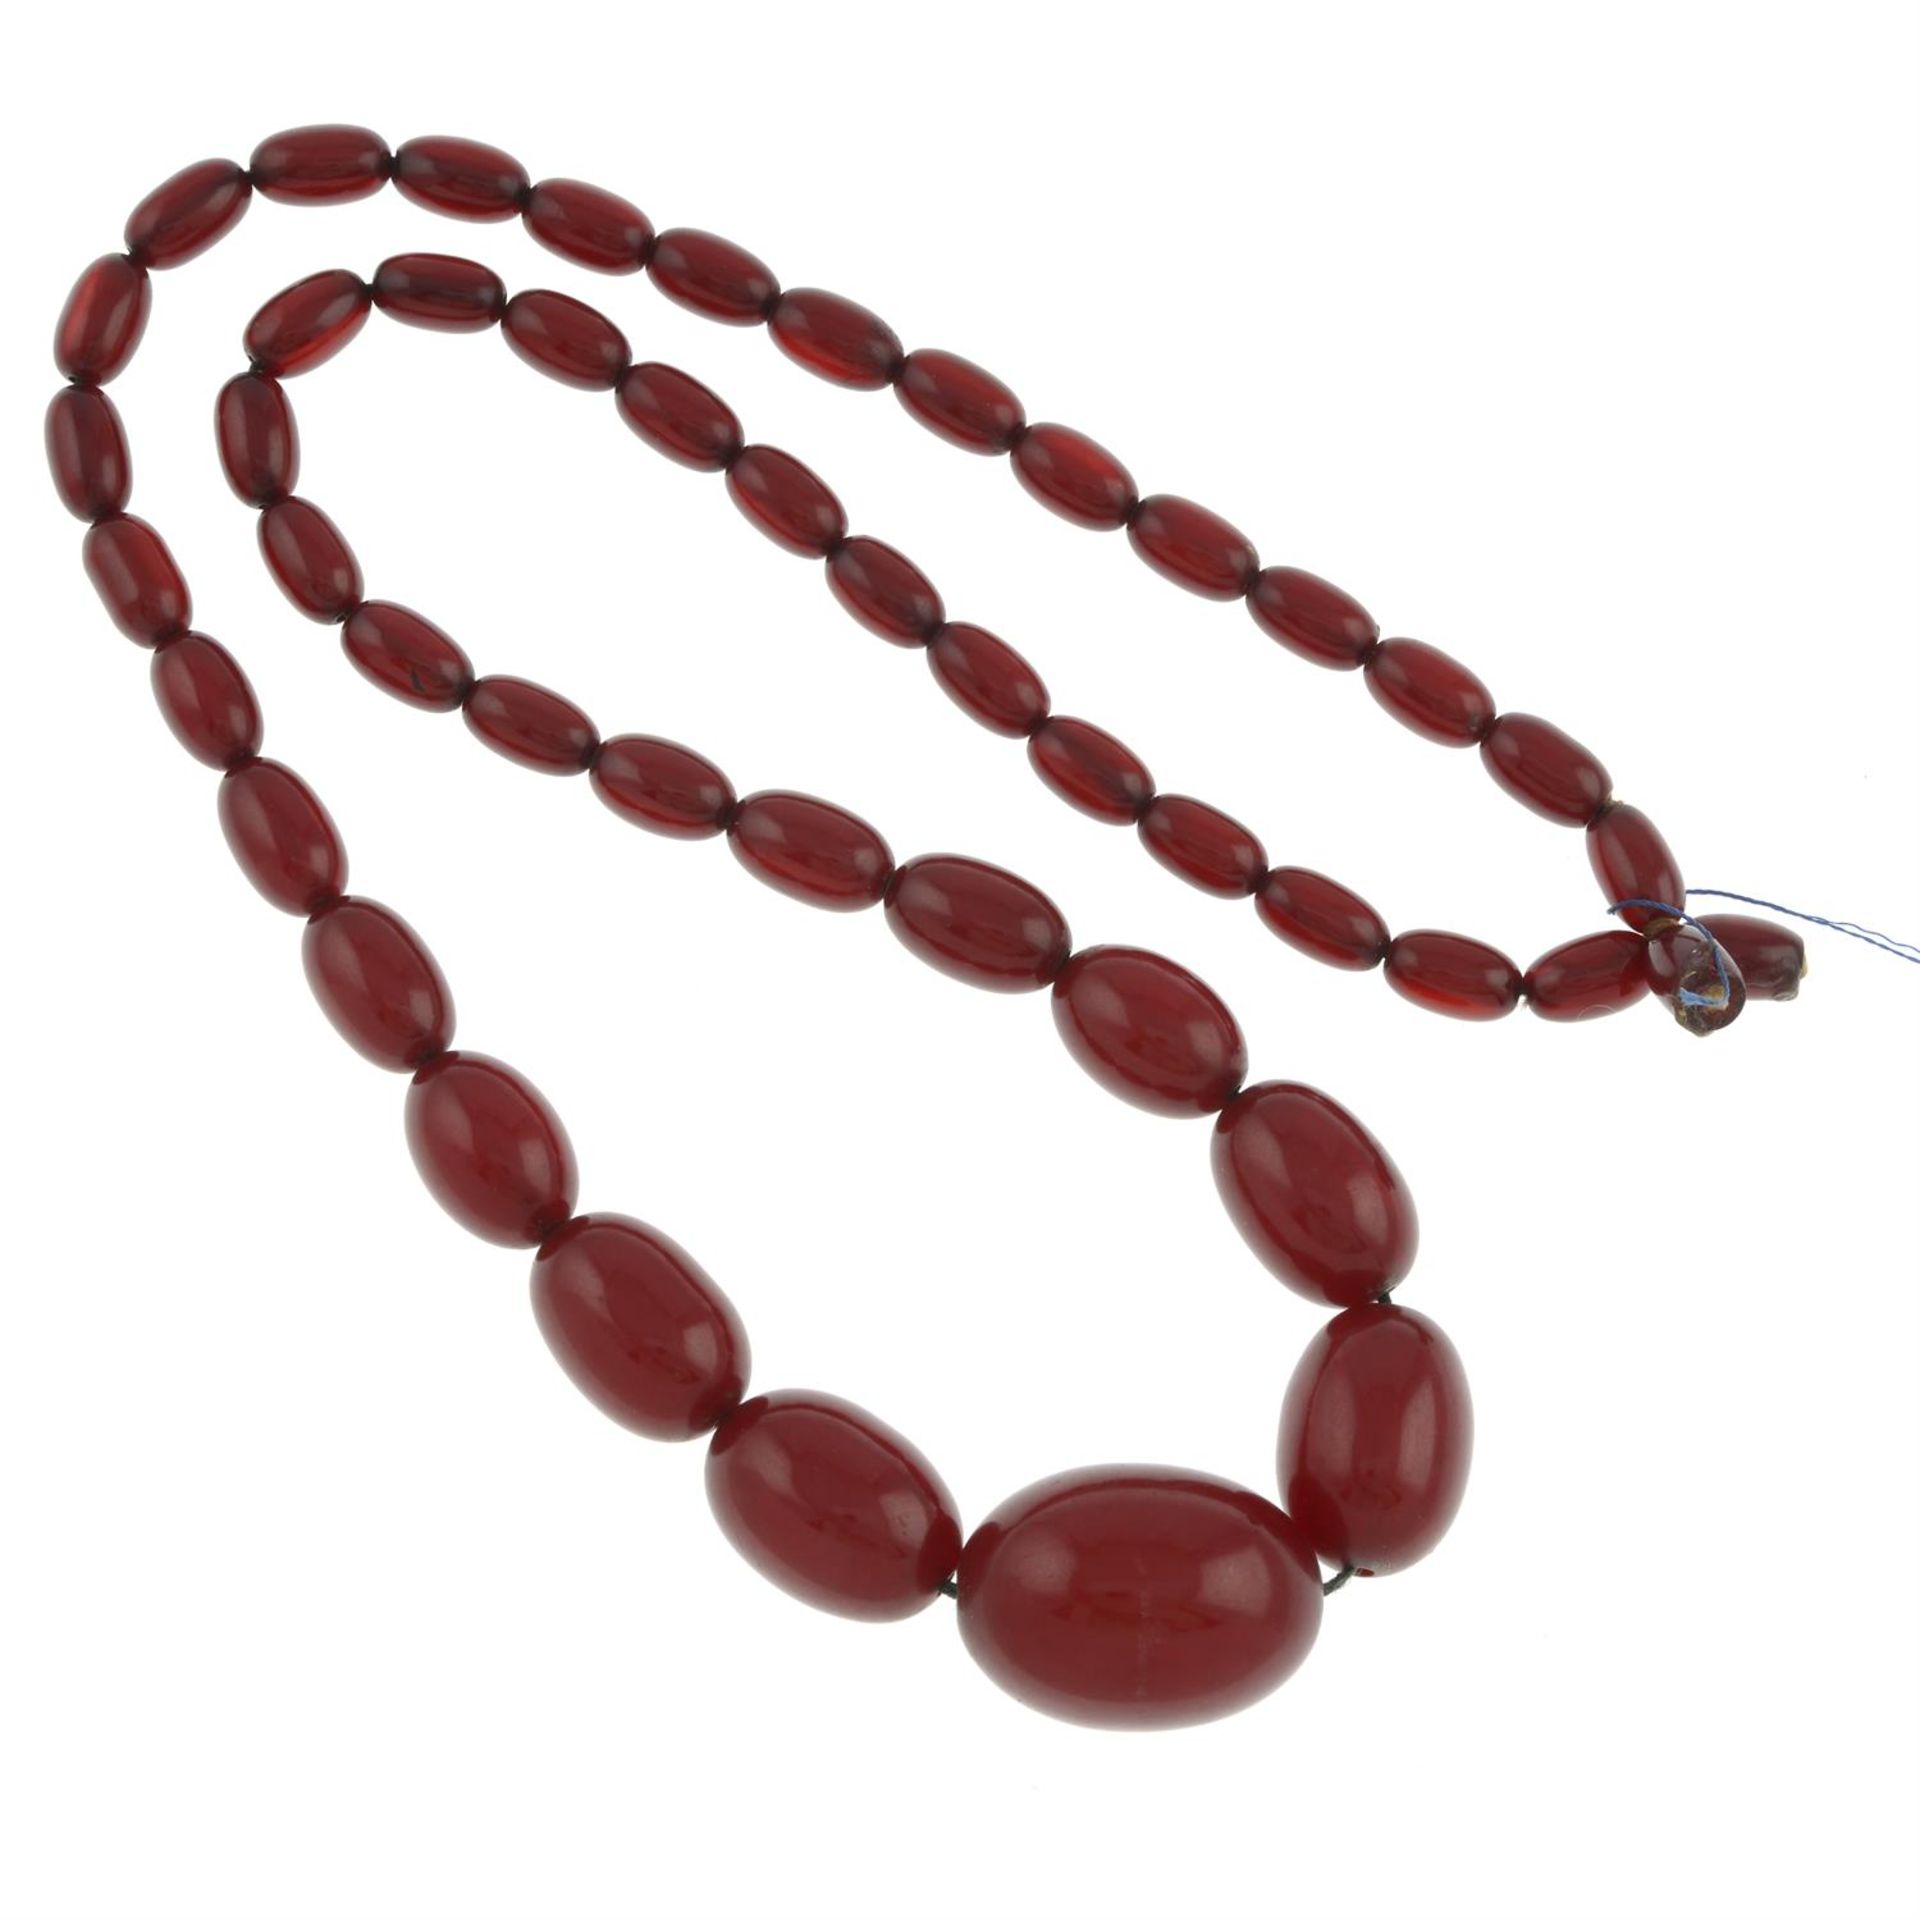 Bakelite bead necklace - Image 2 of 2